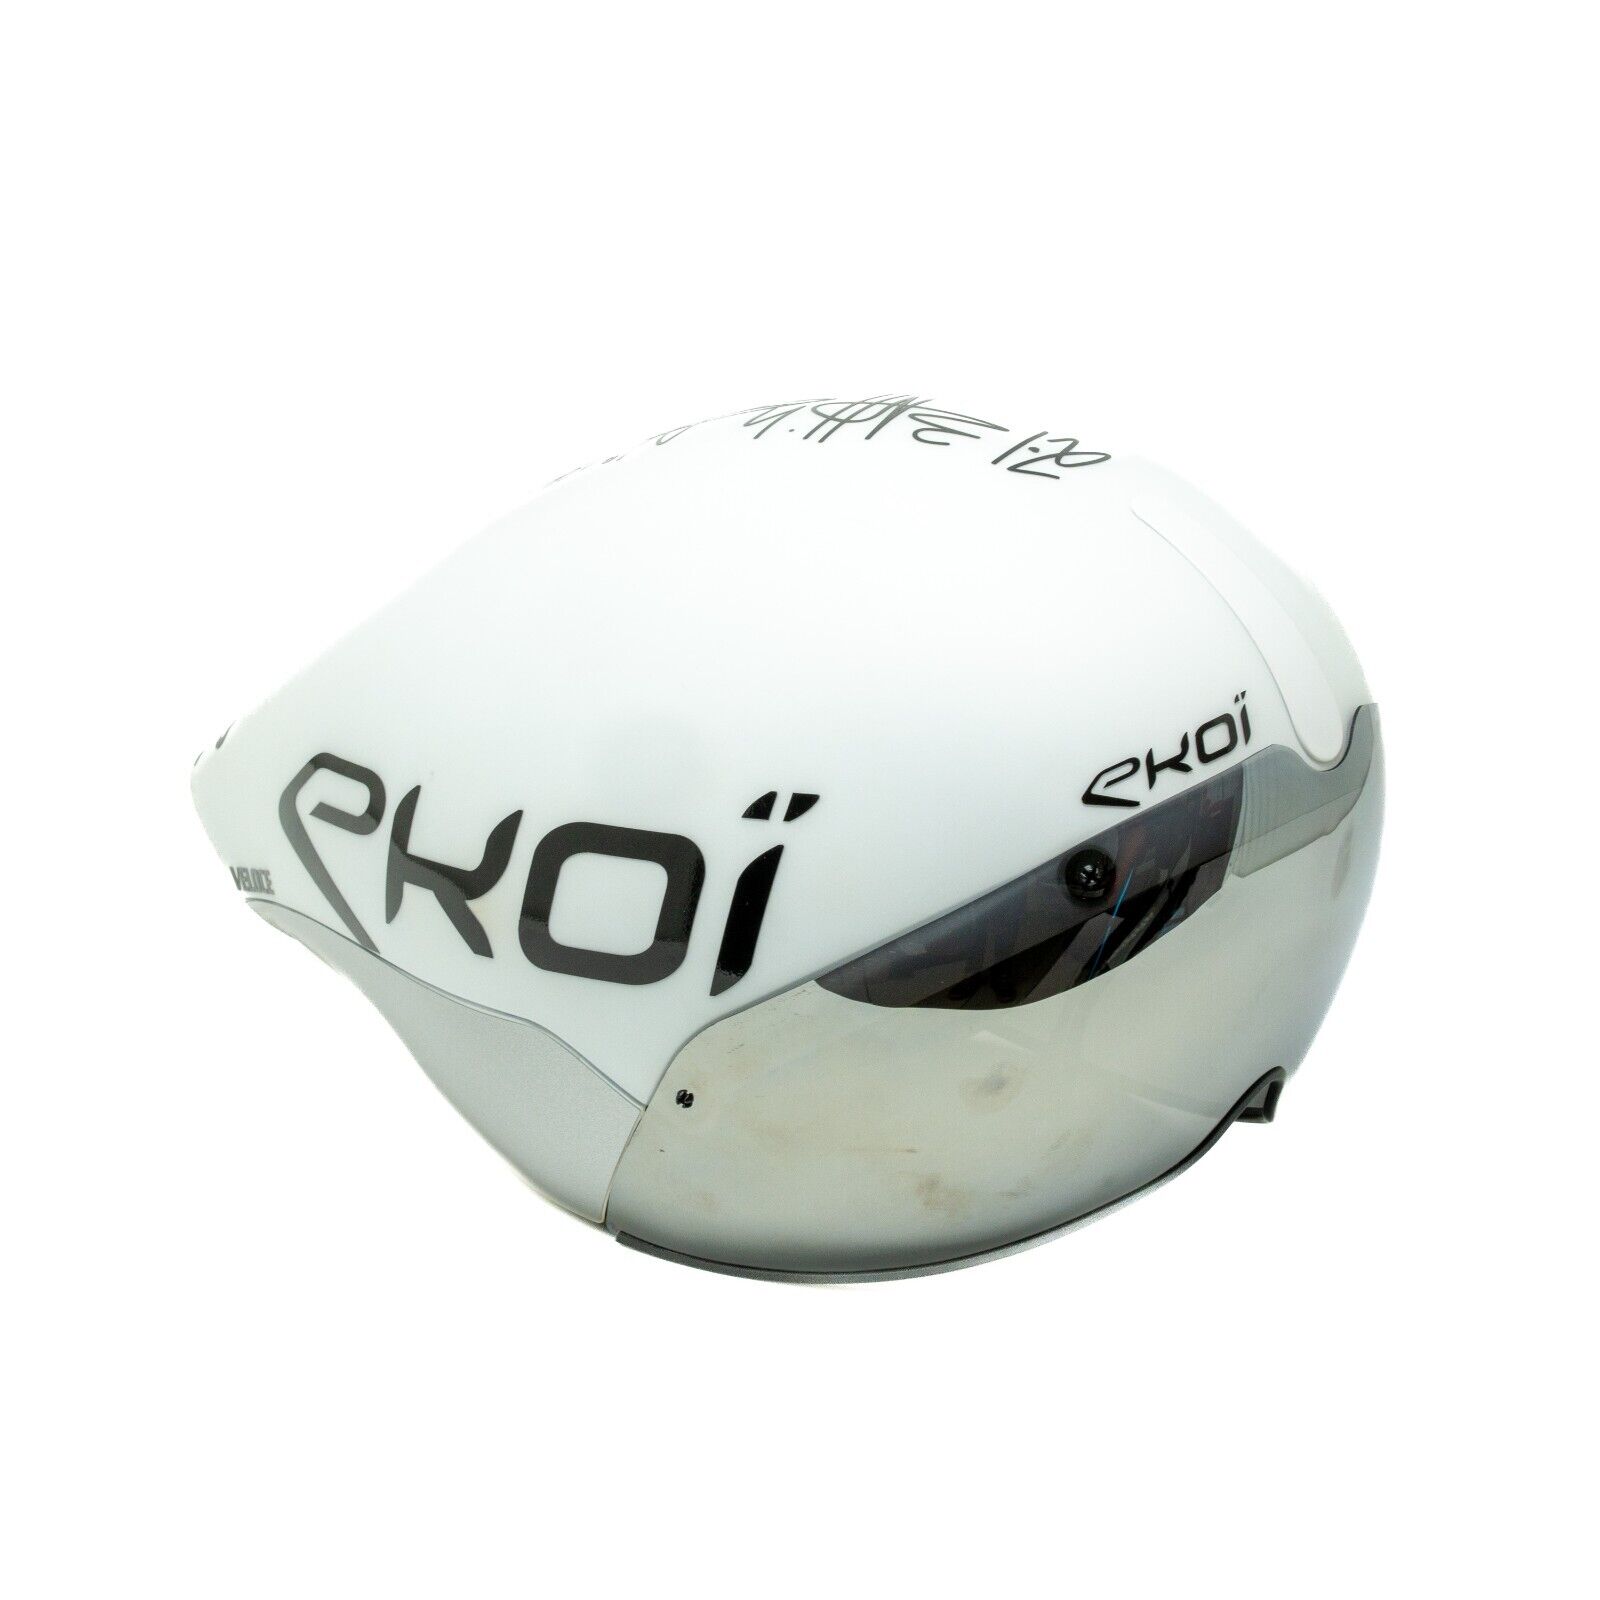 Ekoi Veloce LTD Time Trial Triathlon Cycling Helmet MEDIUM 55-59cm Race Aero